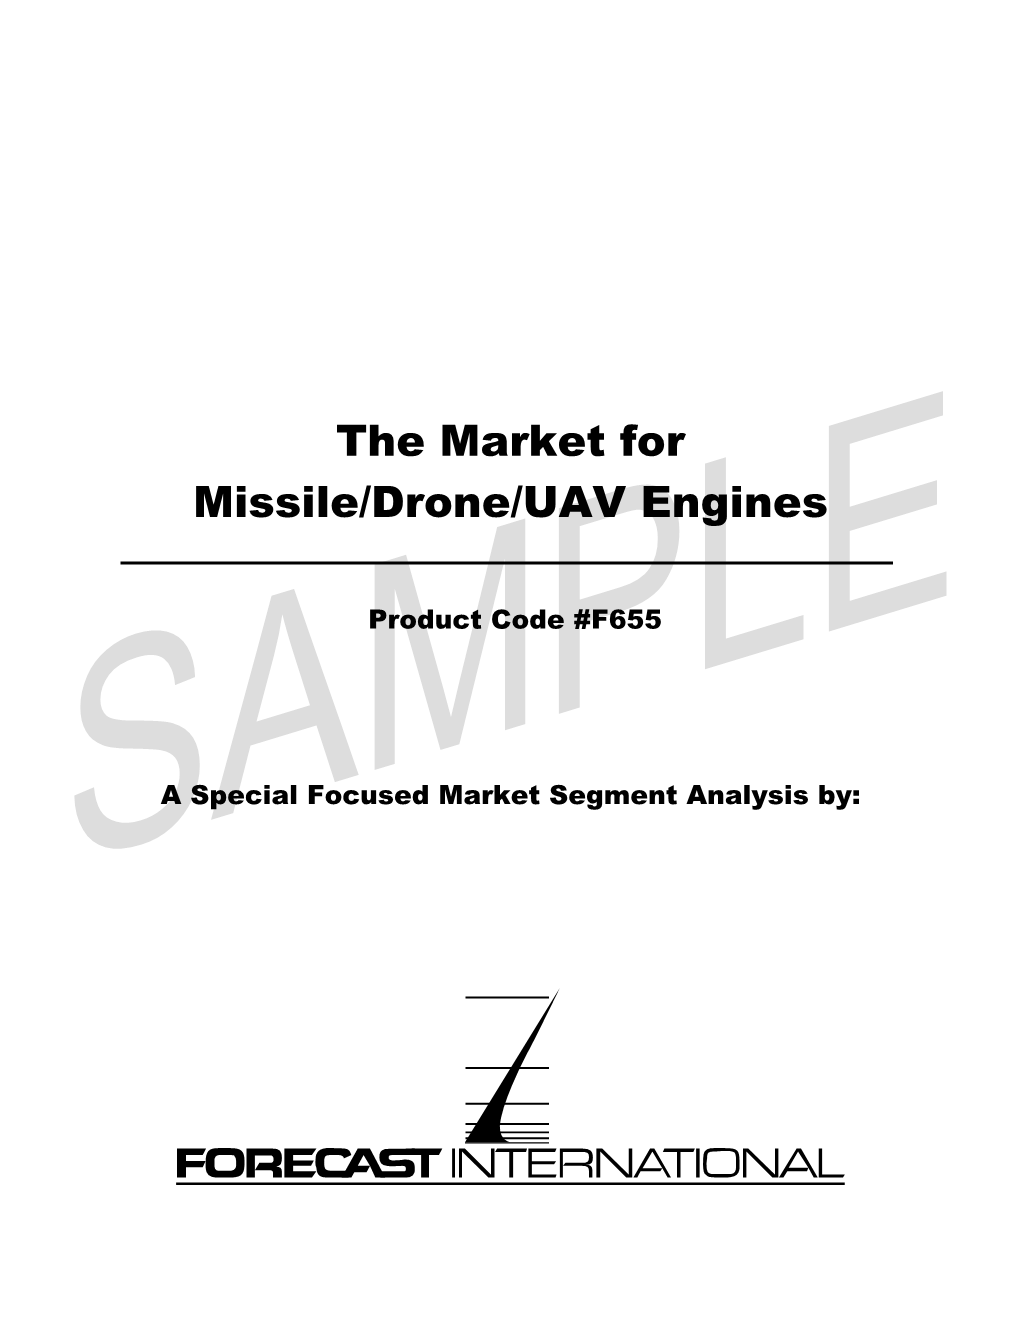 The Market for Missile/Drone/UAV Engines